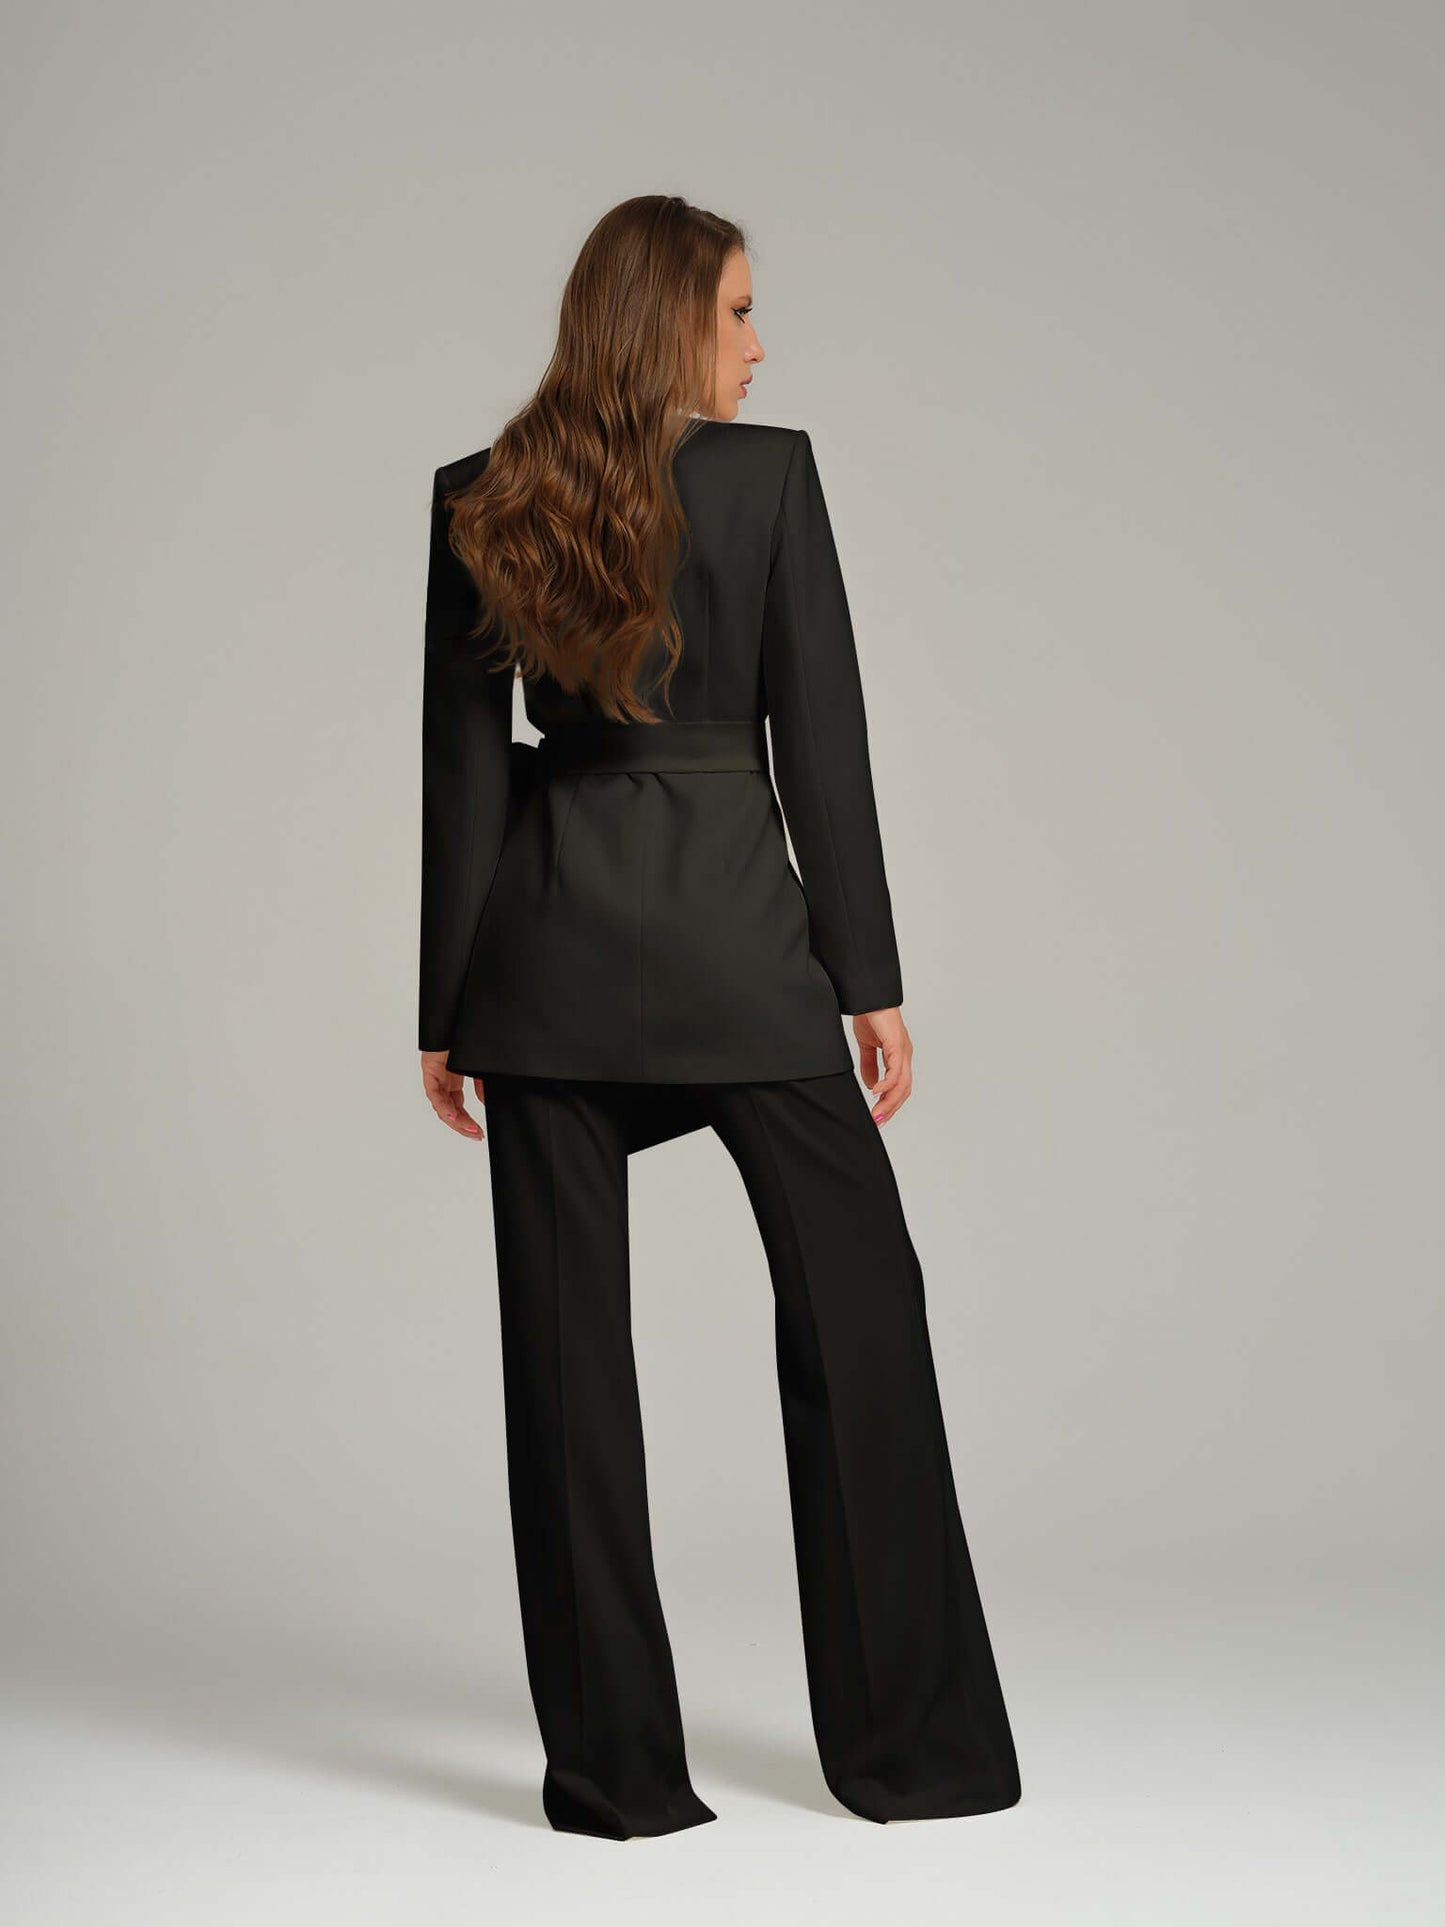 Black Pearl Blazer With Bow Belt by Tia Dorraine Women's Luxury Fashion Designer Clothing Brand